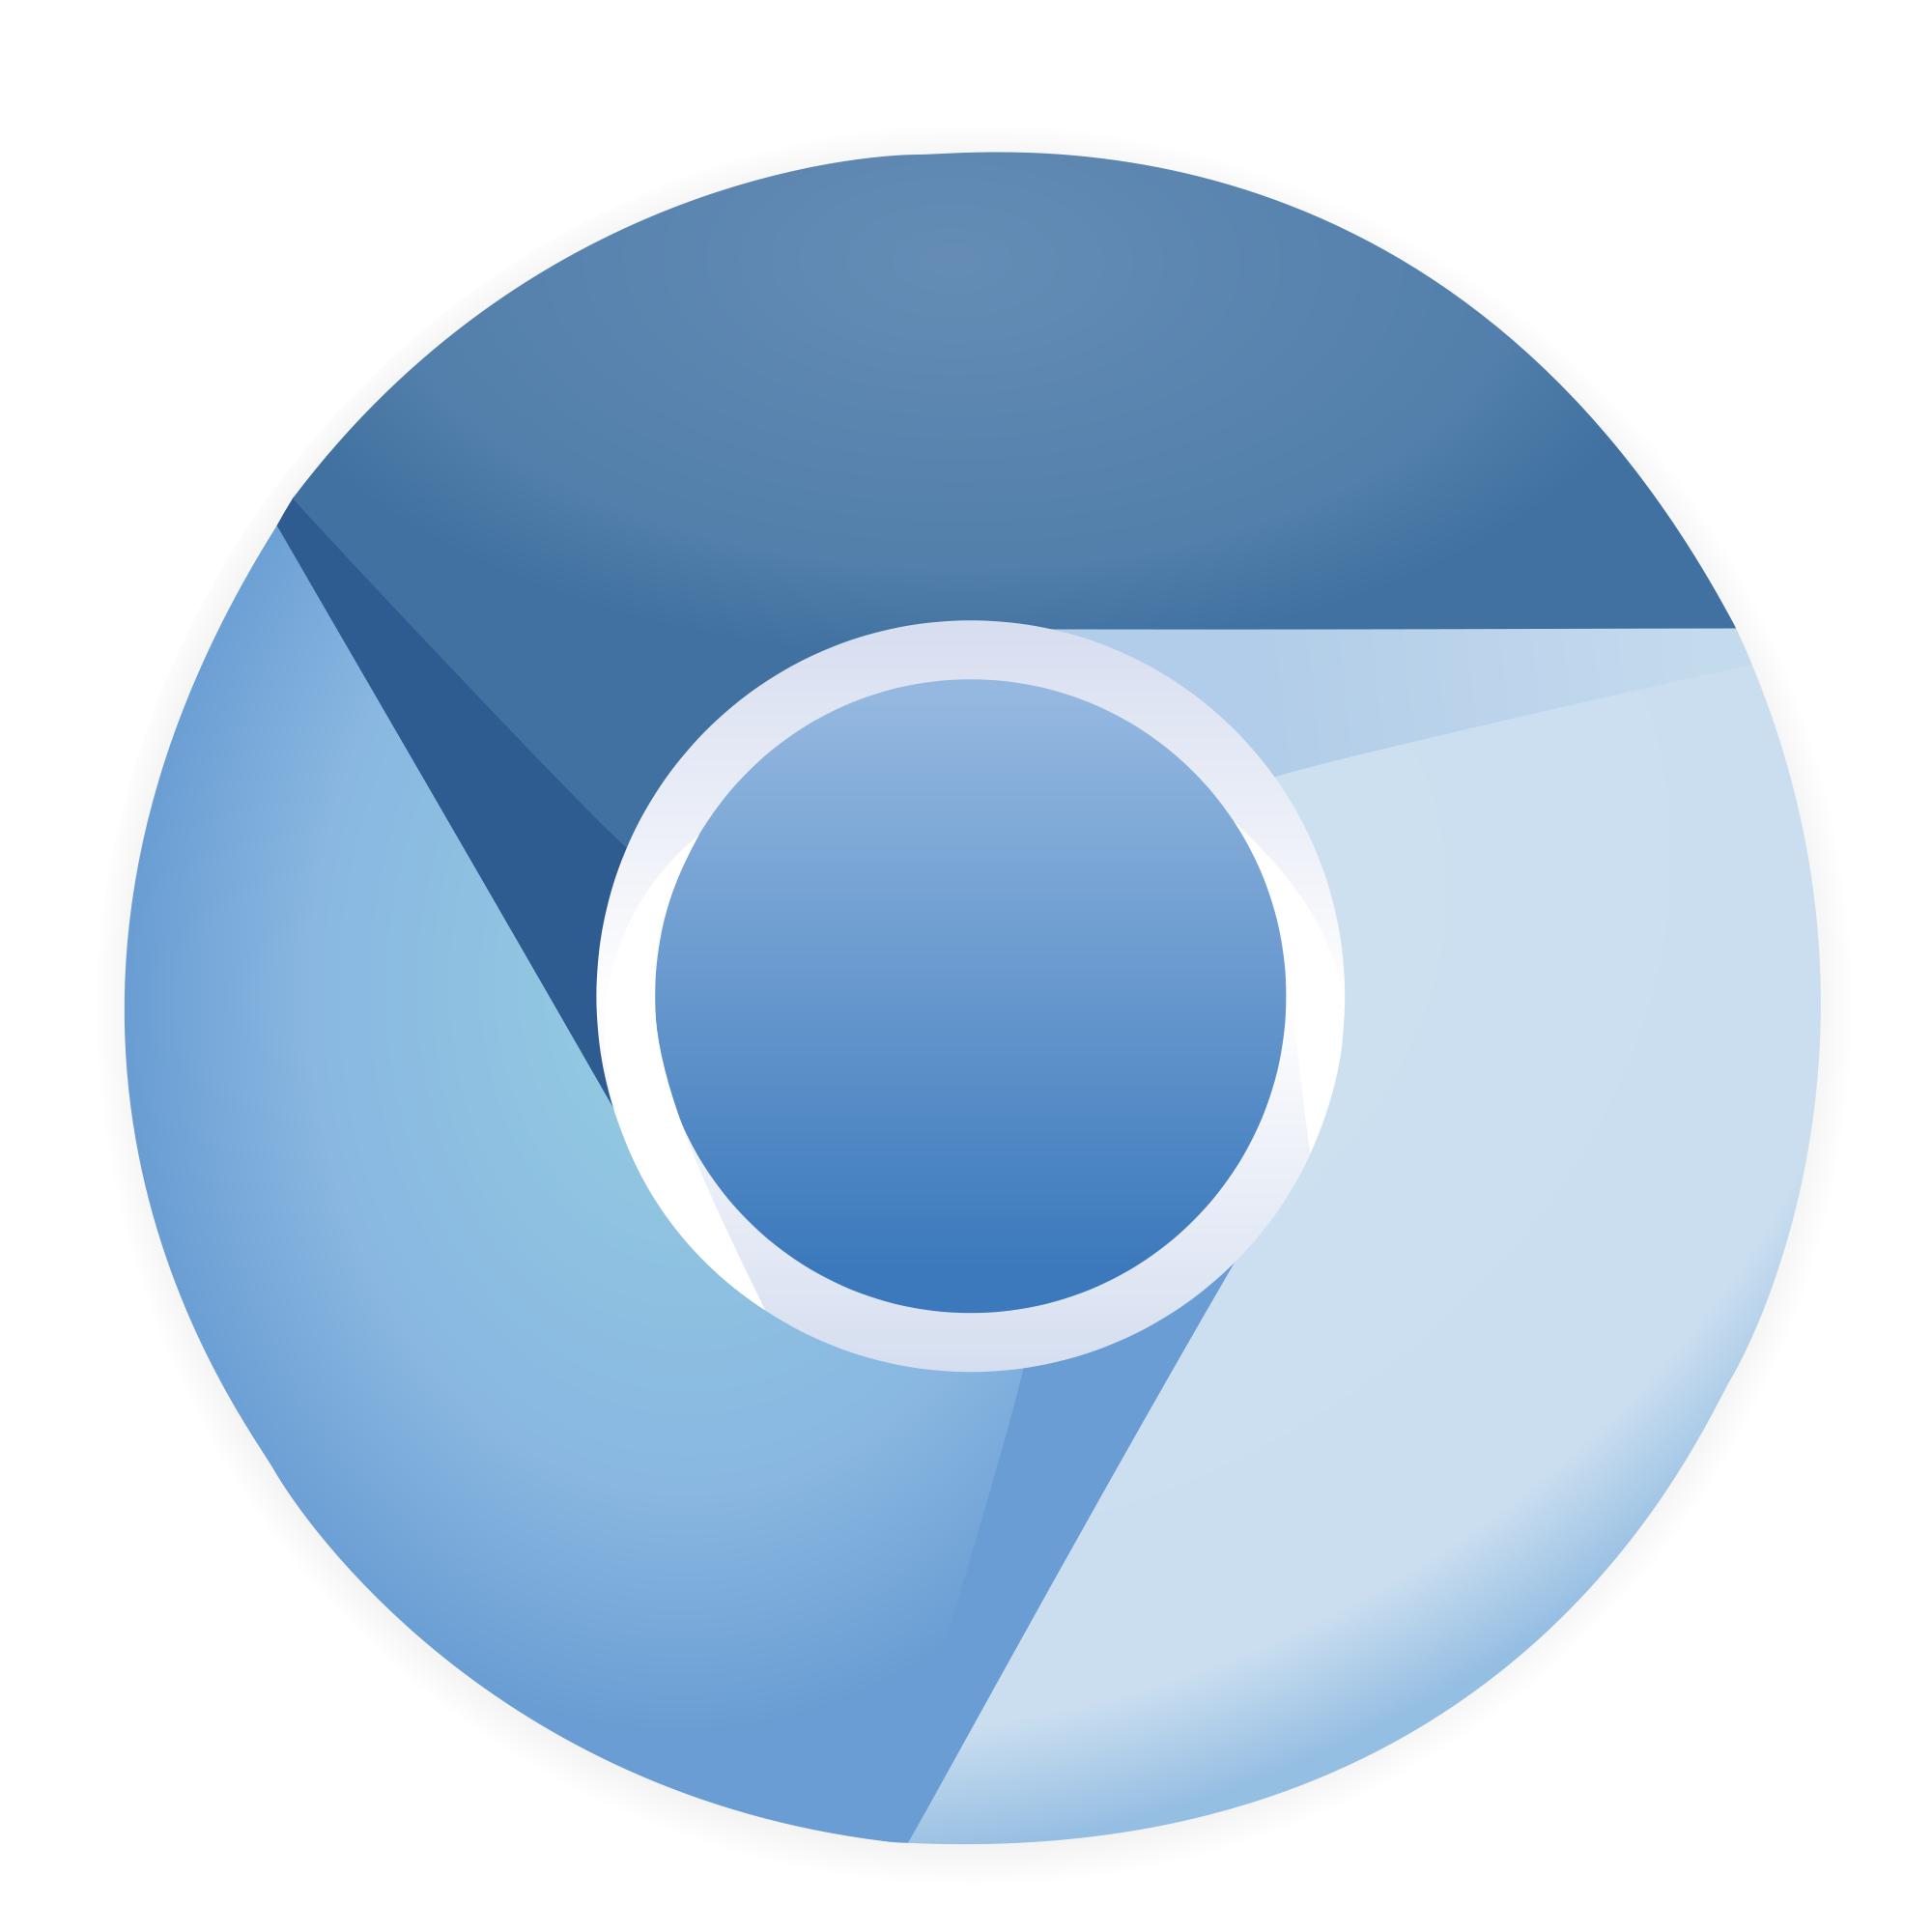 Chrome Logo Valor Historia Png Images